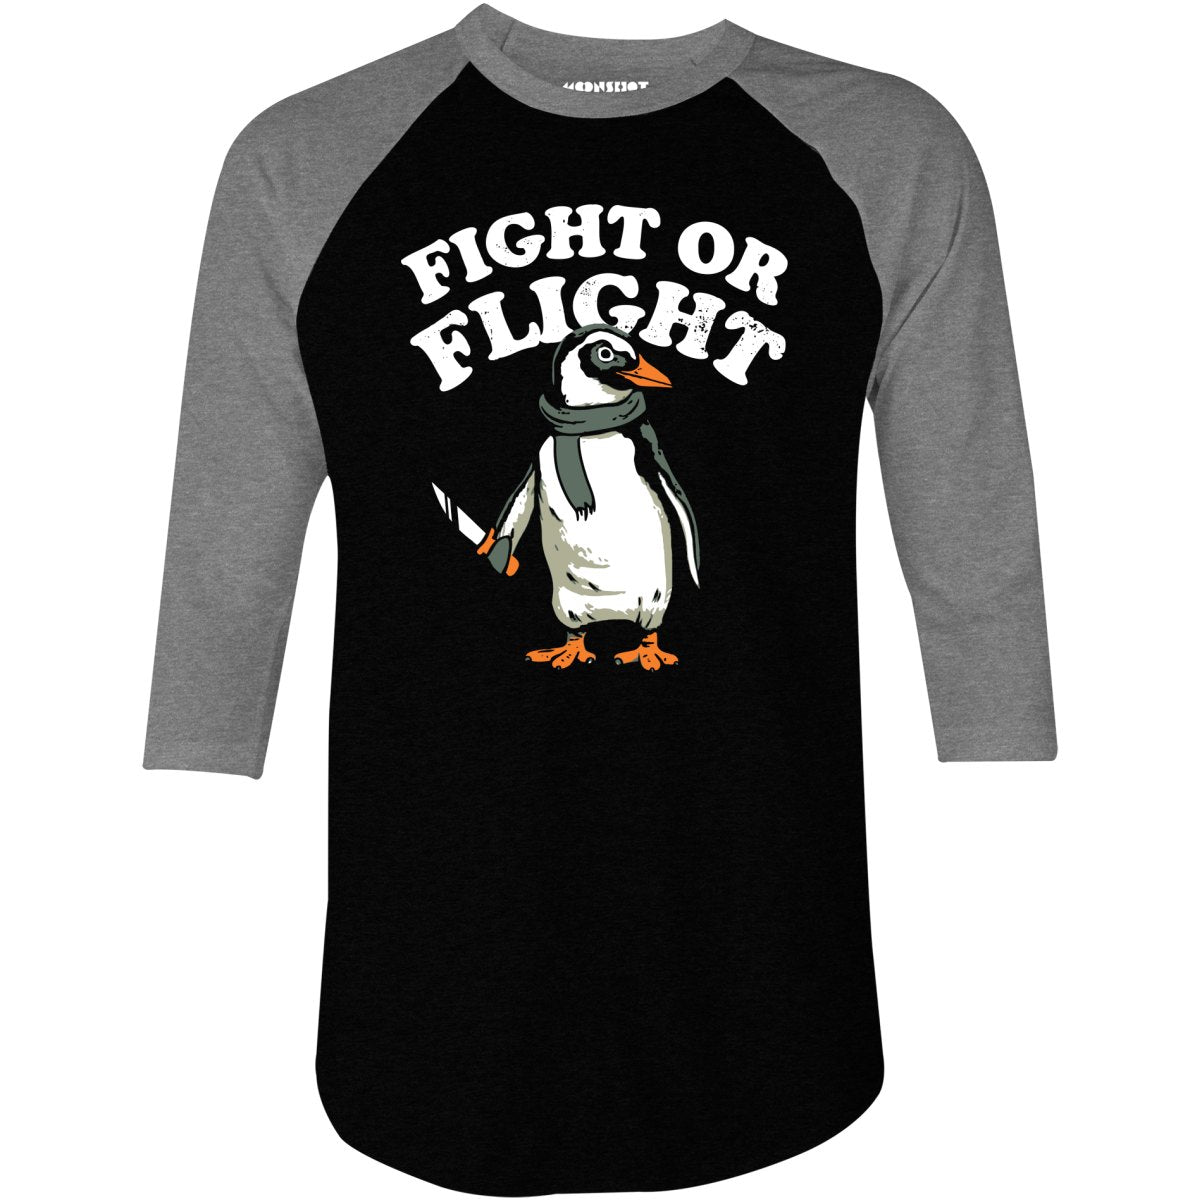 Fight or Flight - 3/4 Sleeve Raglan T-Shirt